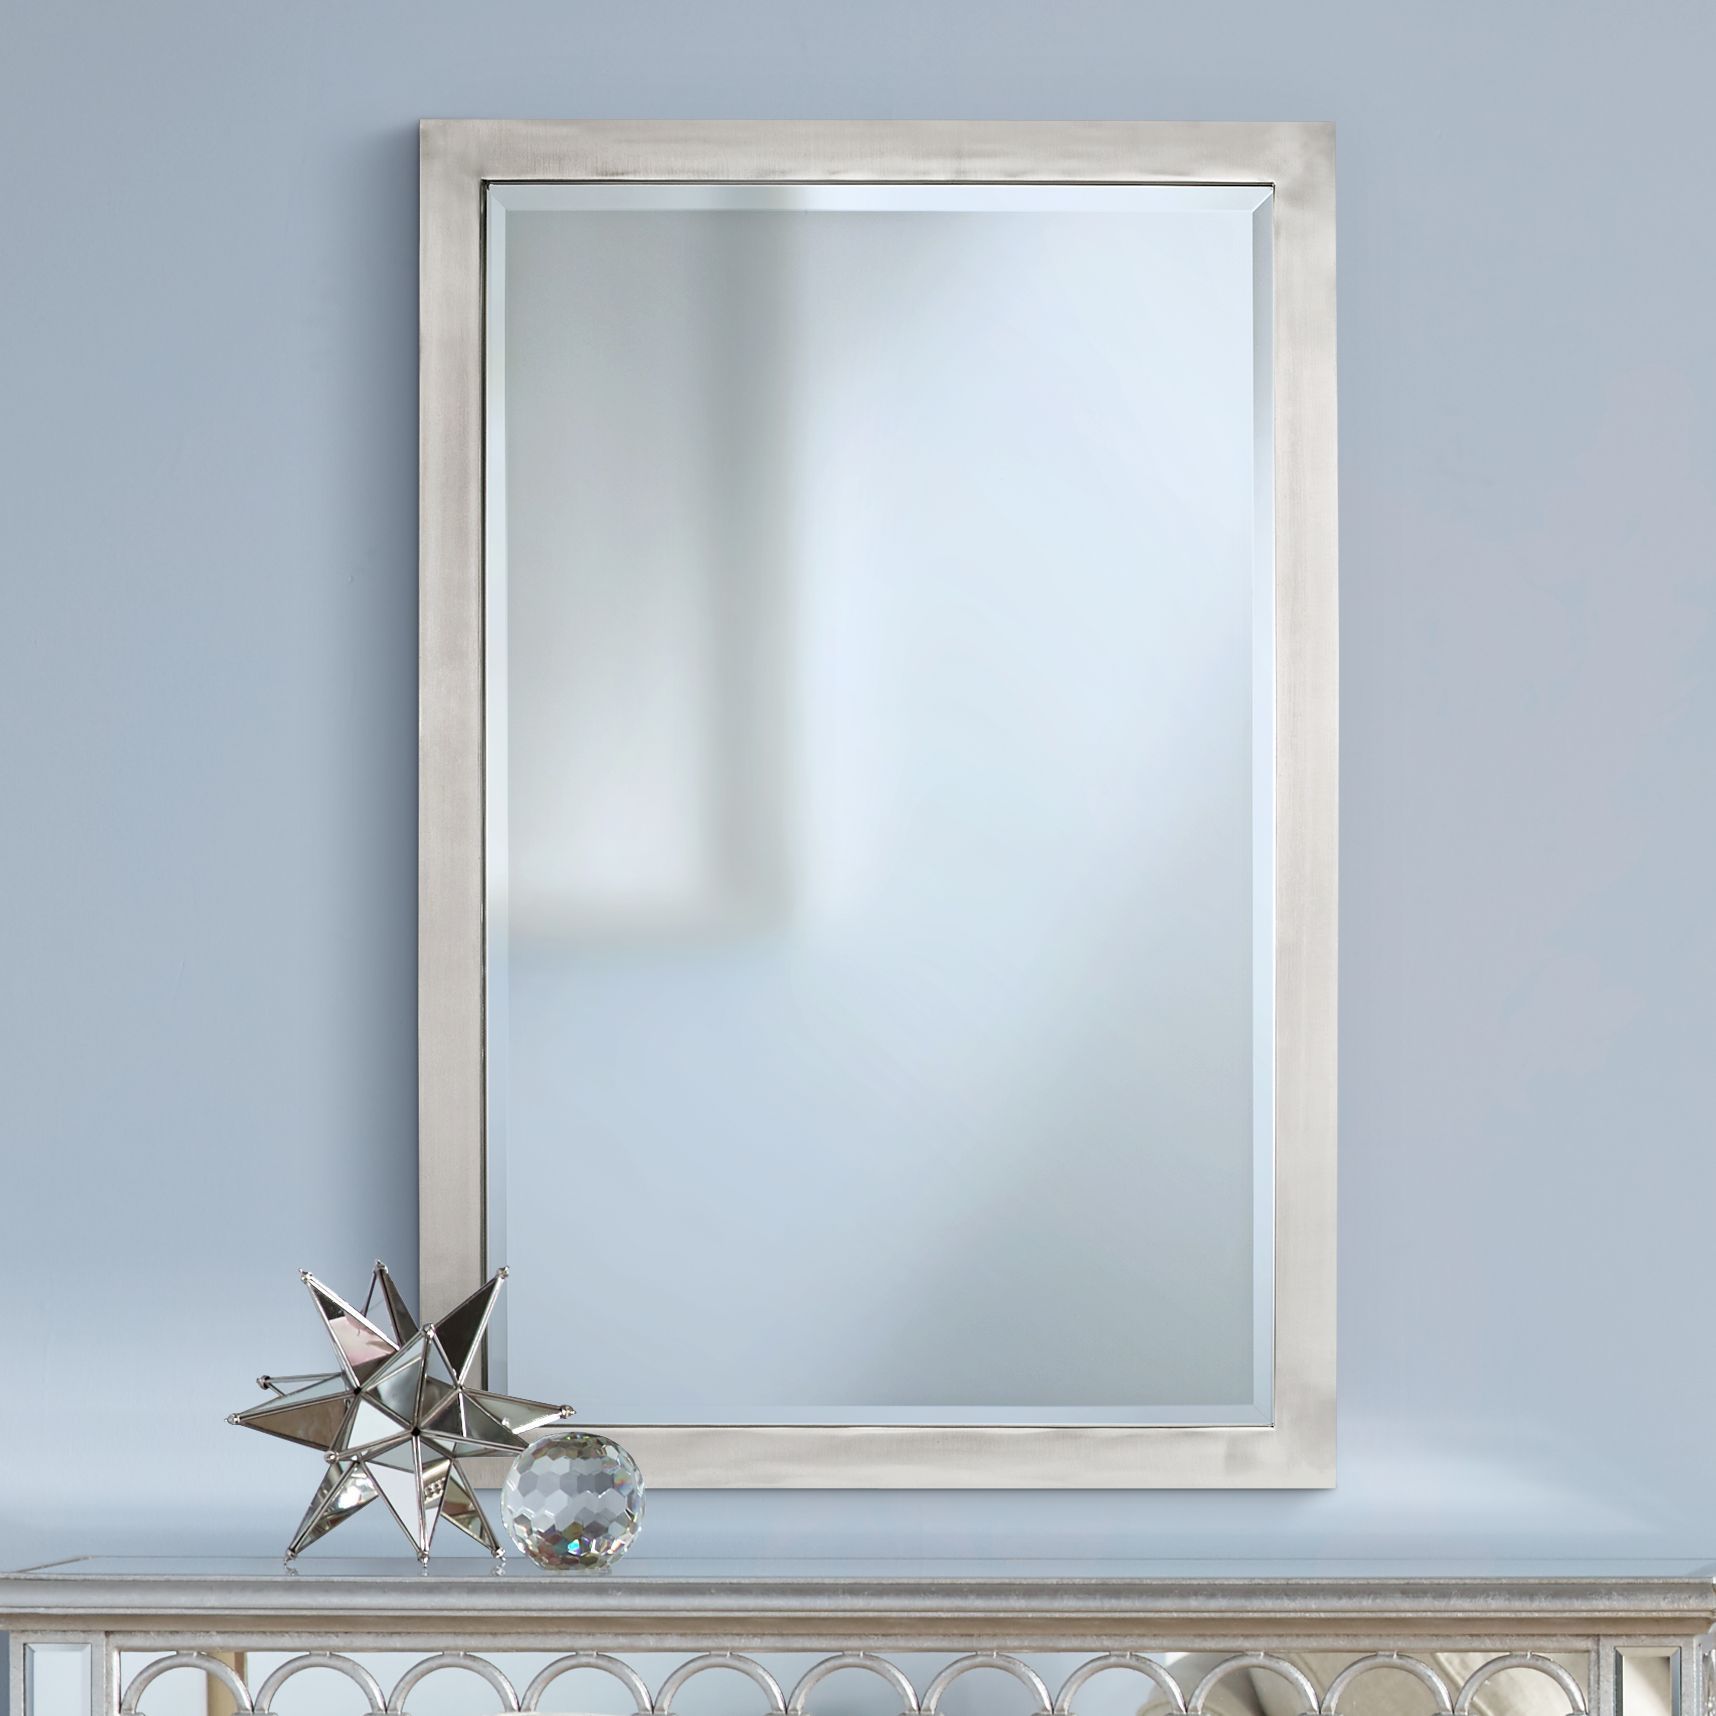 Metzeo 33" X 22" Brushed Nickel Wall Mirror – #t4543 | Lamps Plus In Regarding Oxidized Nickel Wall Mirrors (View 7 of 15)